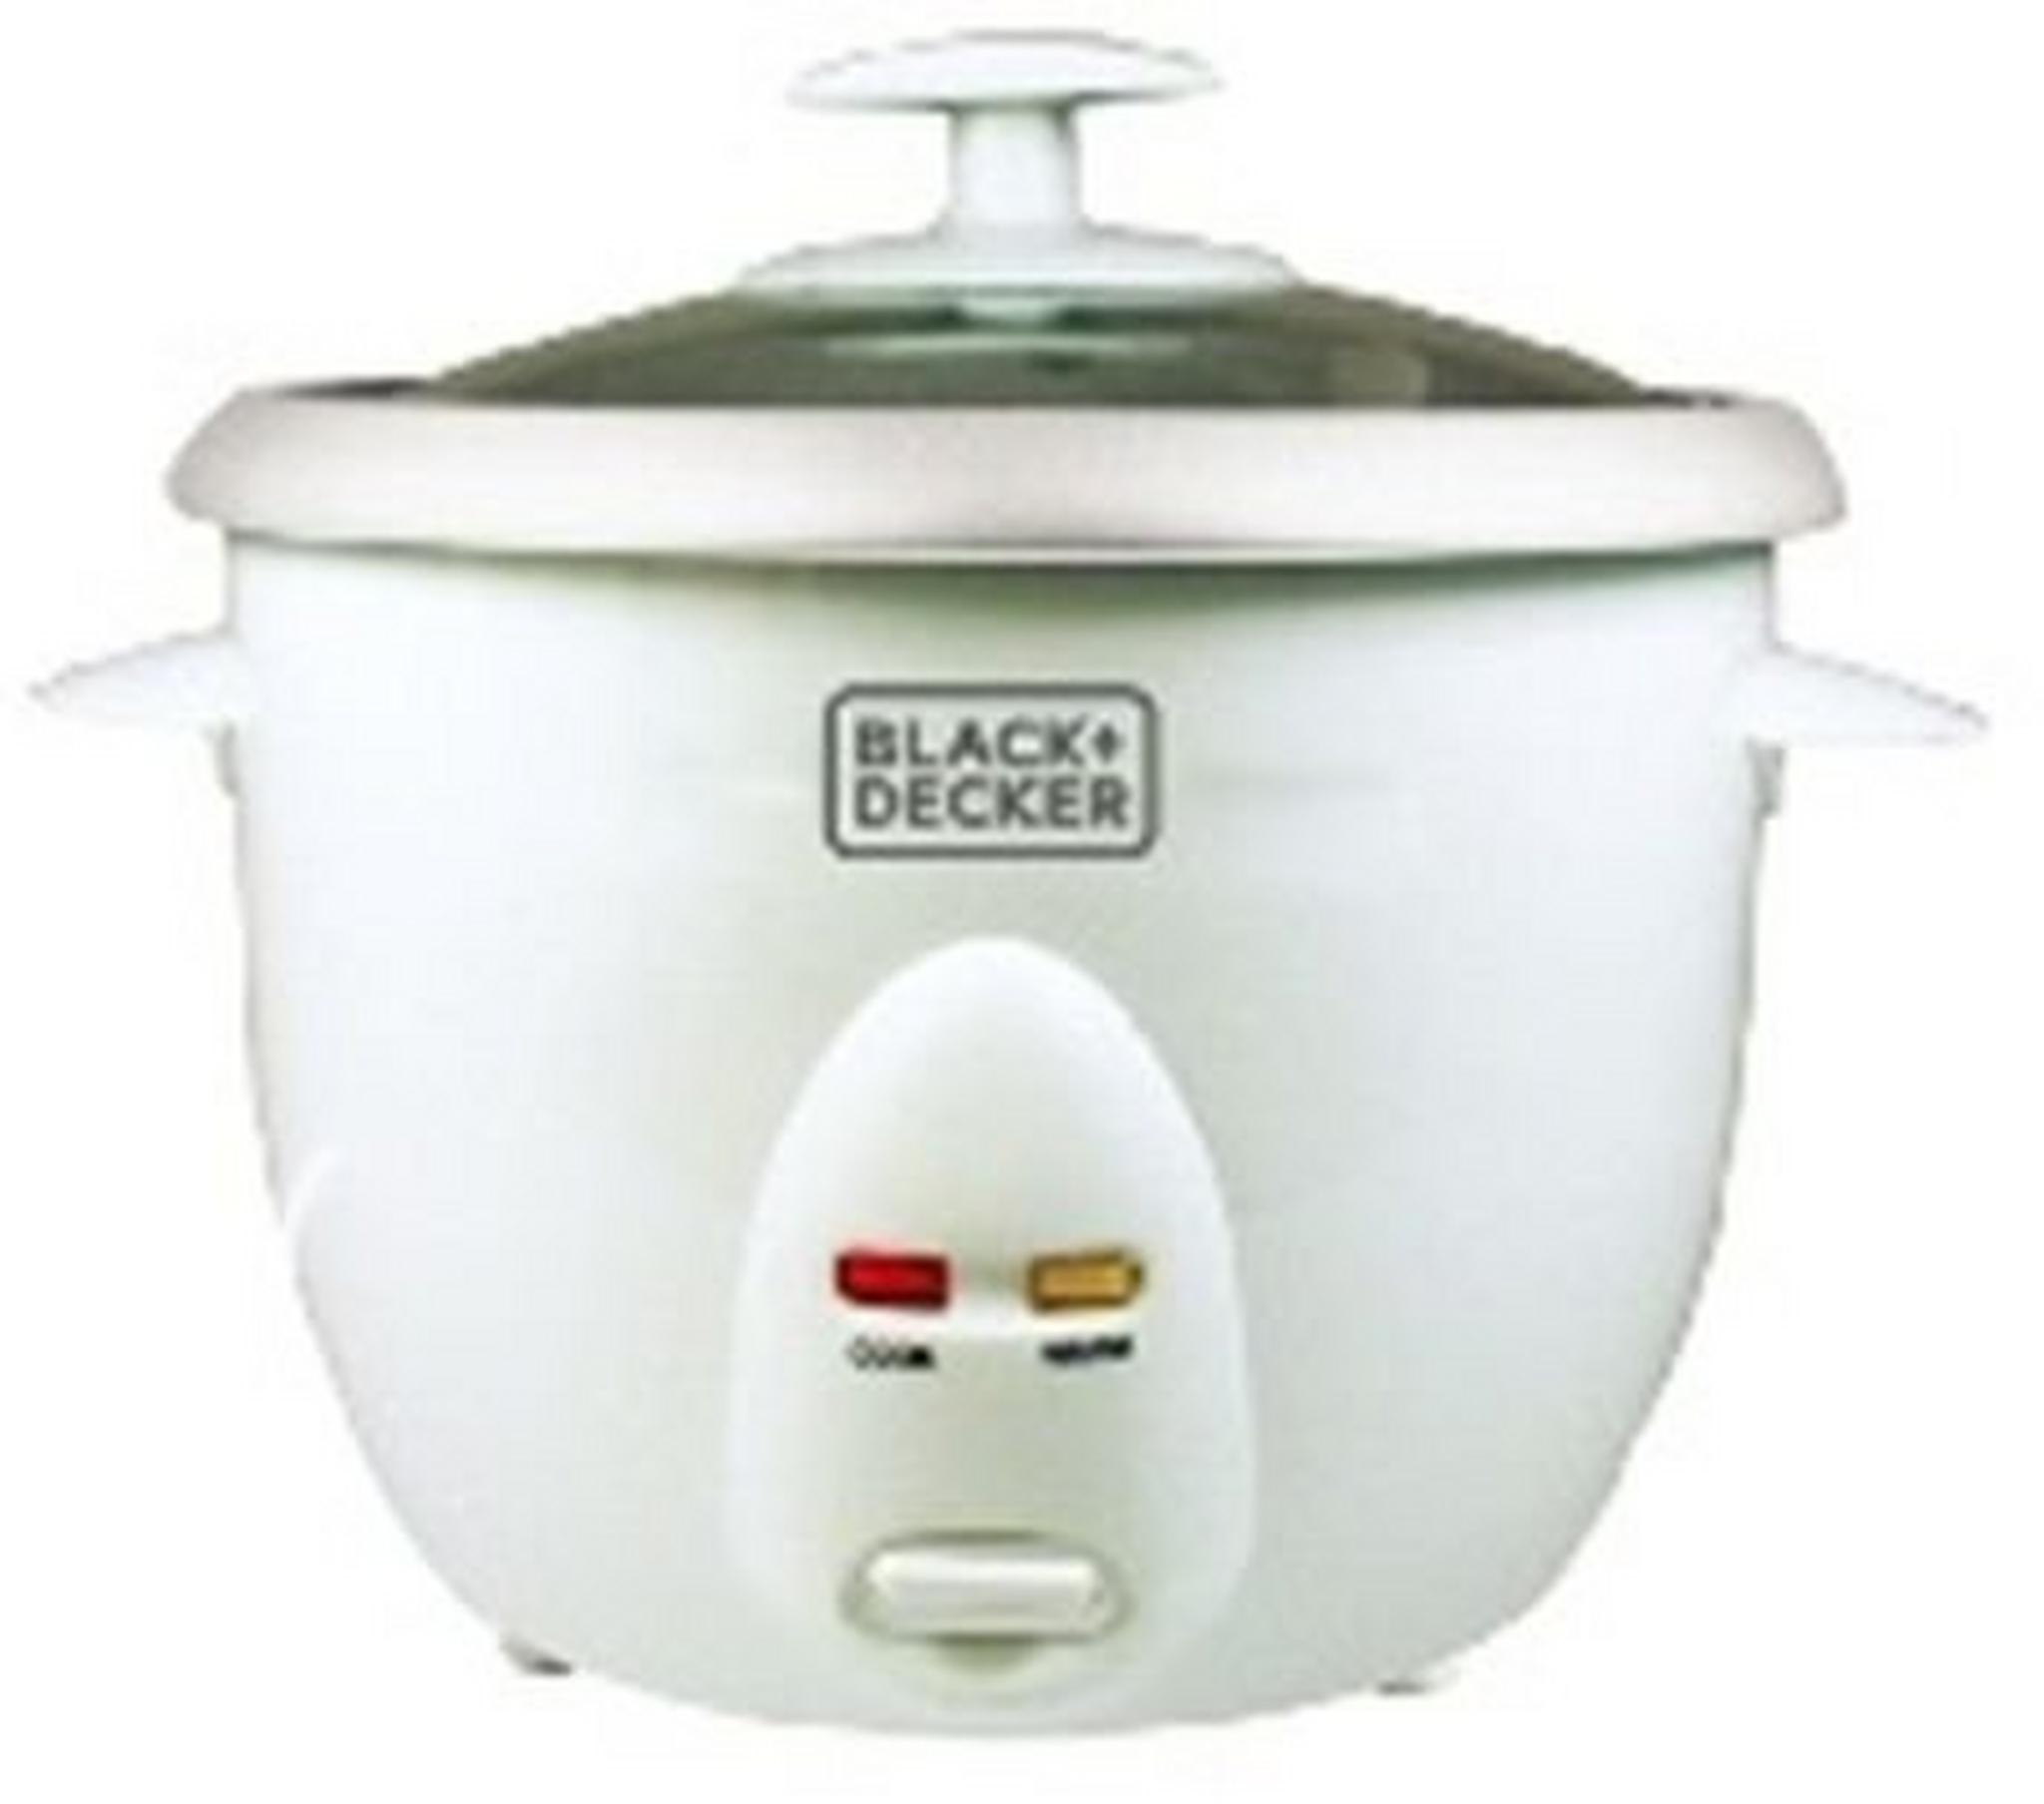 Black & Decker 400W 1 Liter Rice Cooker - White - RC1050-B5